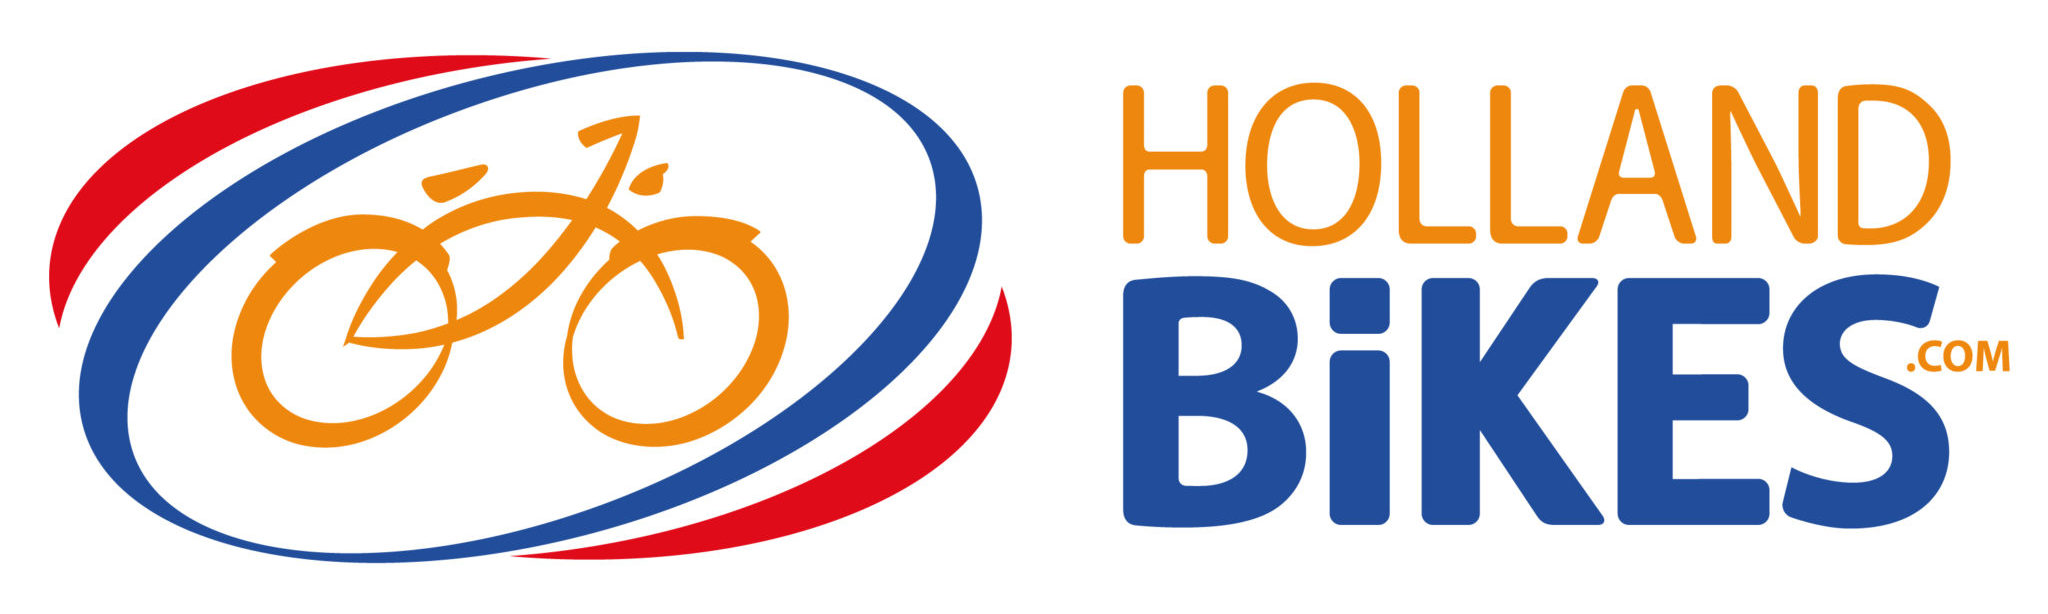 Holland Bikes Logo   HD   2